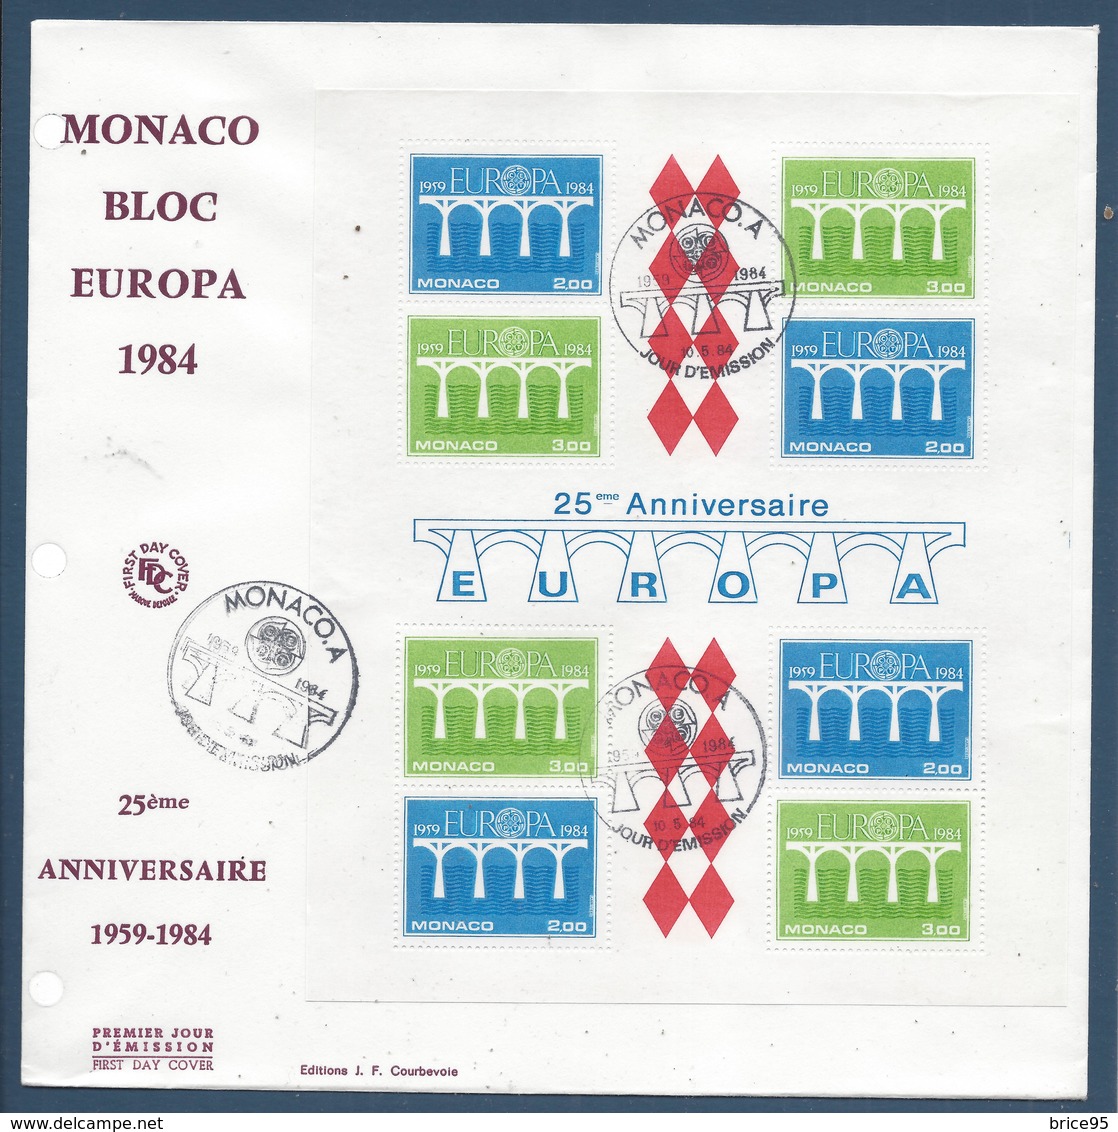 Monaco FDC - Premier Jour - Grand Format - Yt Bloc N° 28 - Europa - 1984 - FDC